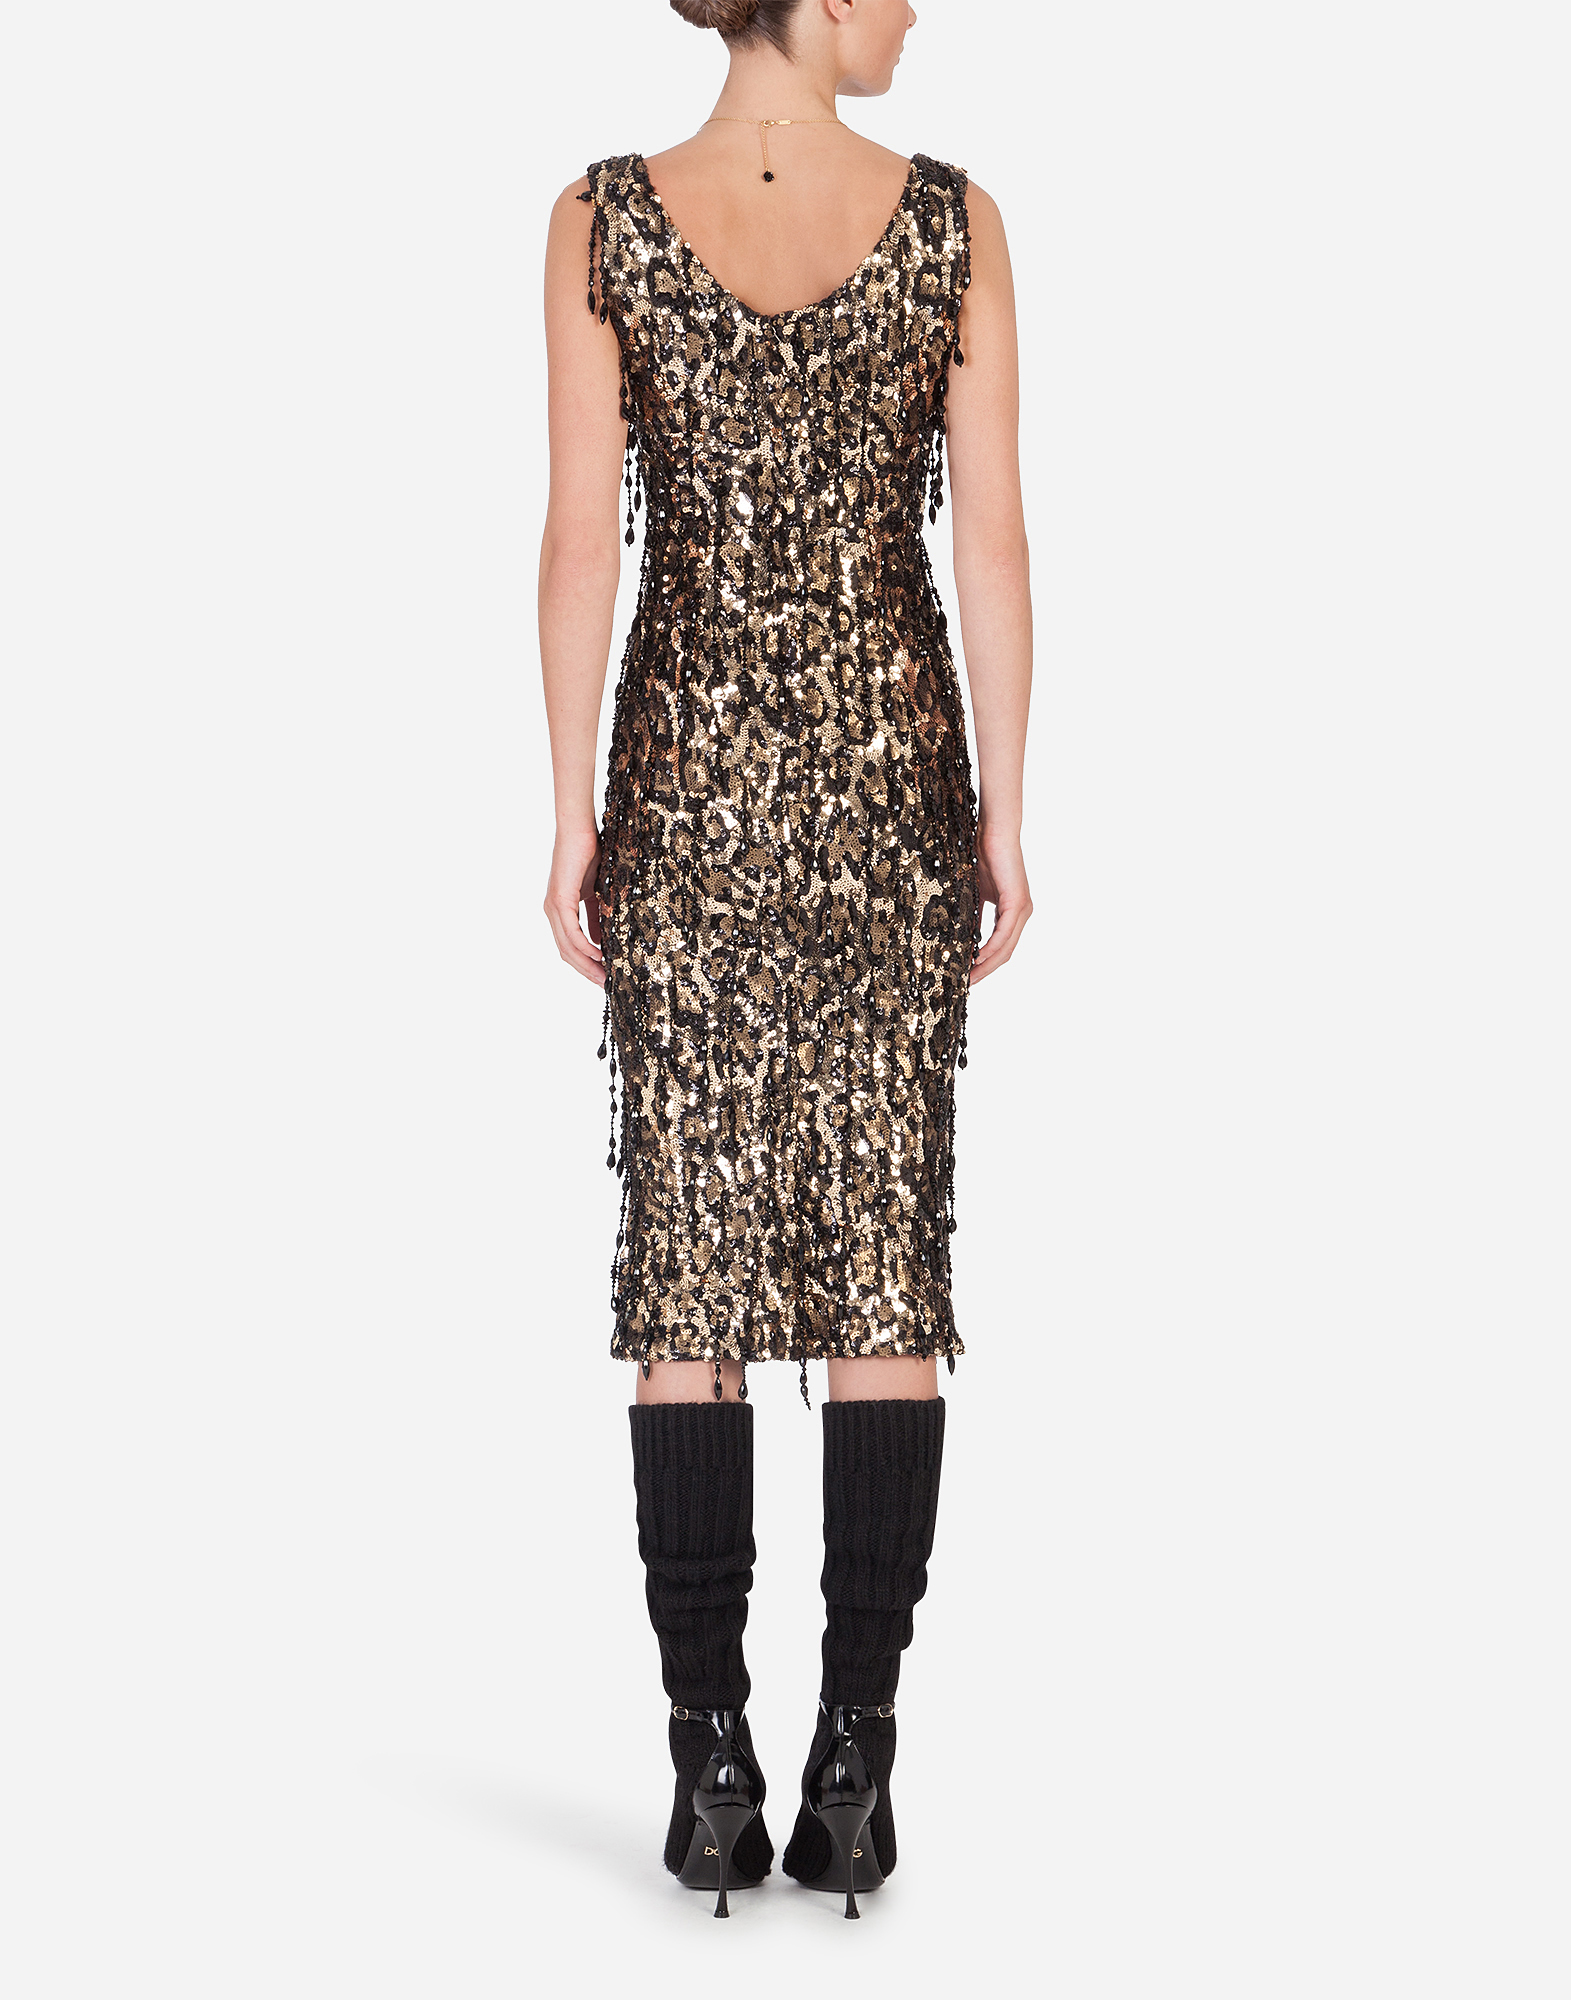 dolce and gabbana leopard sequin dress